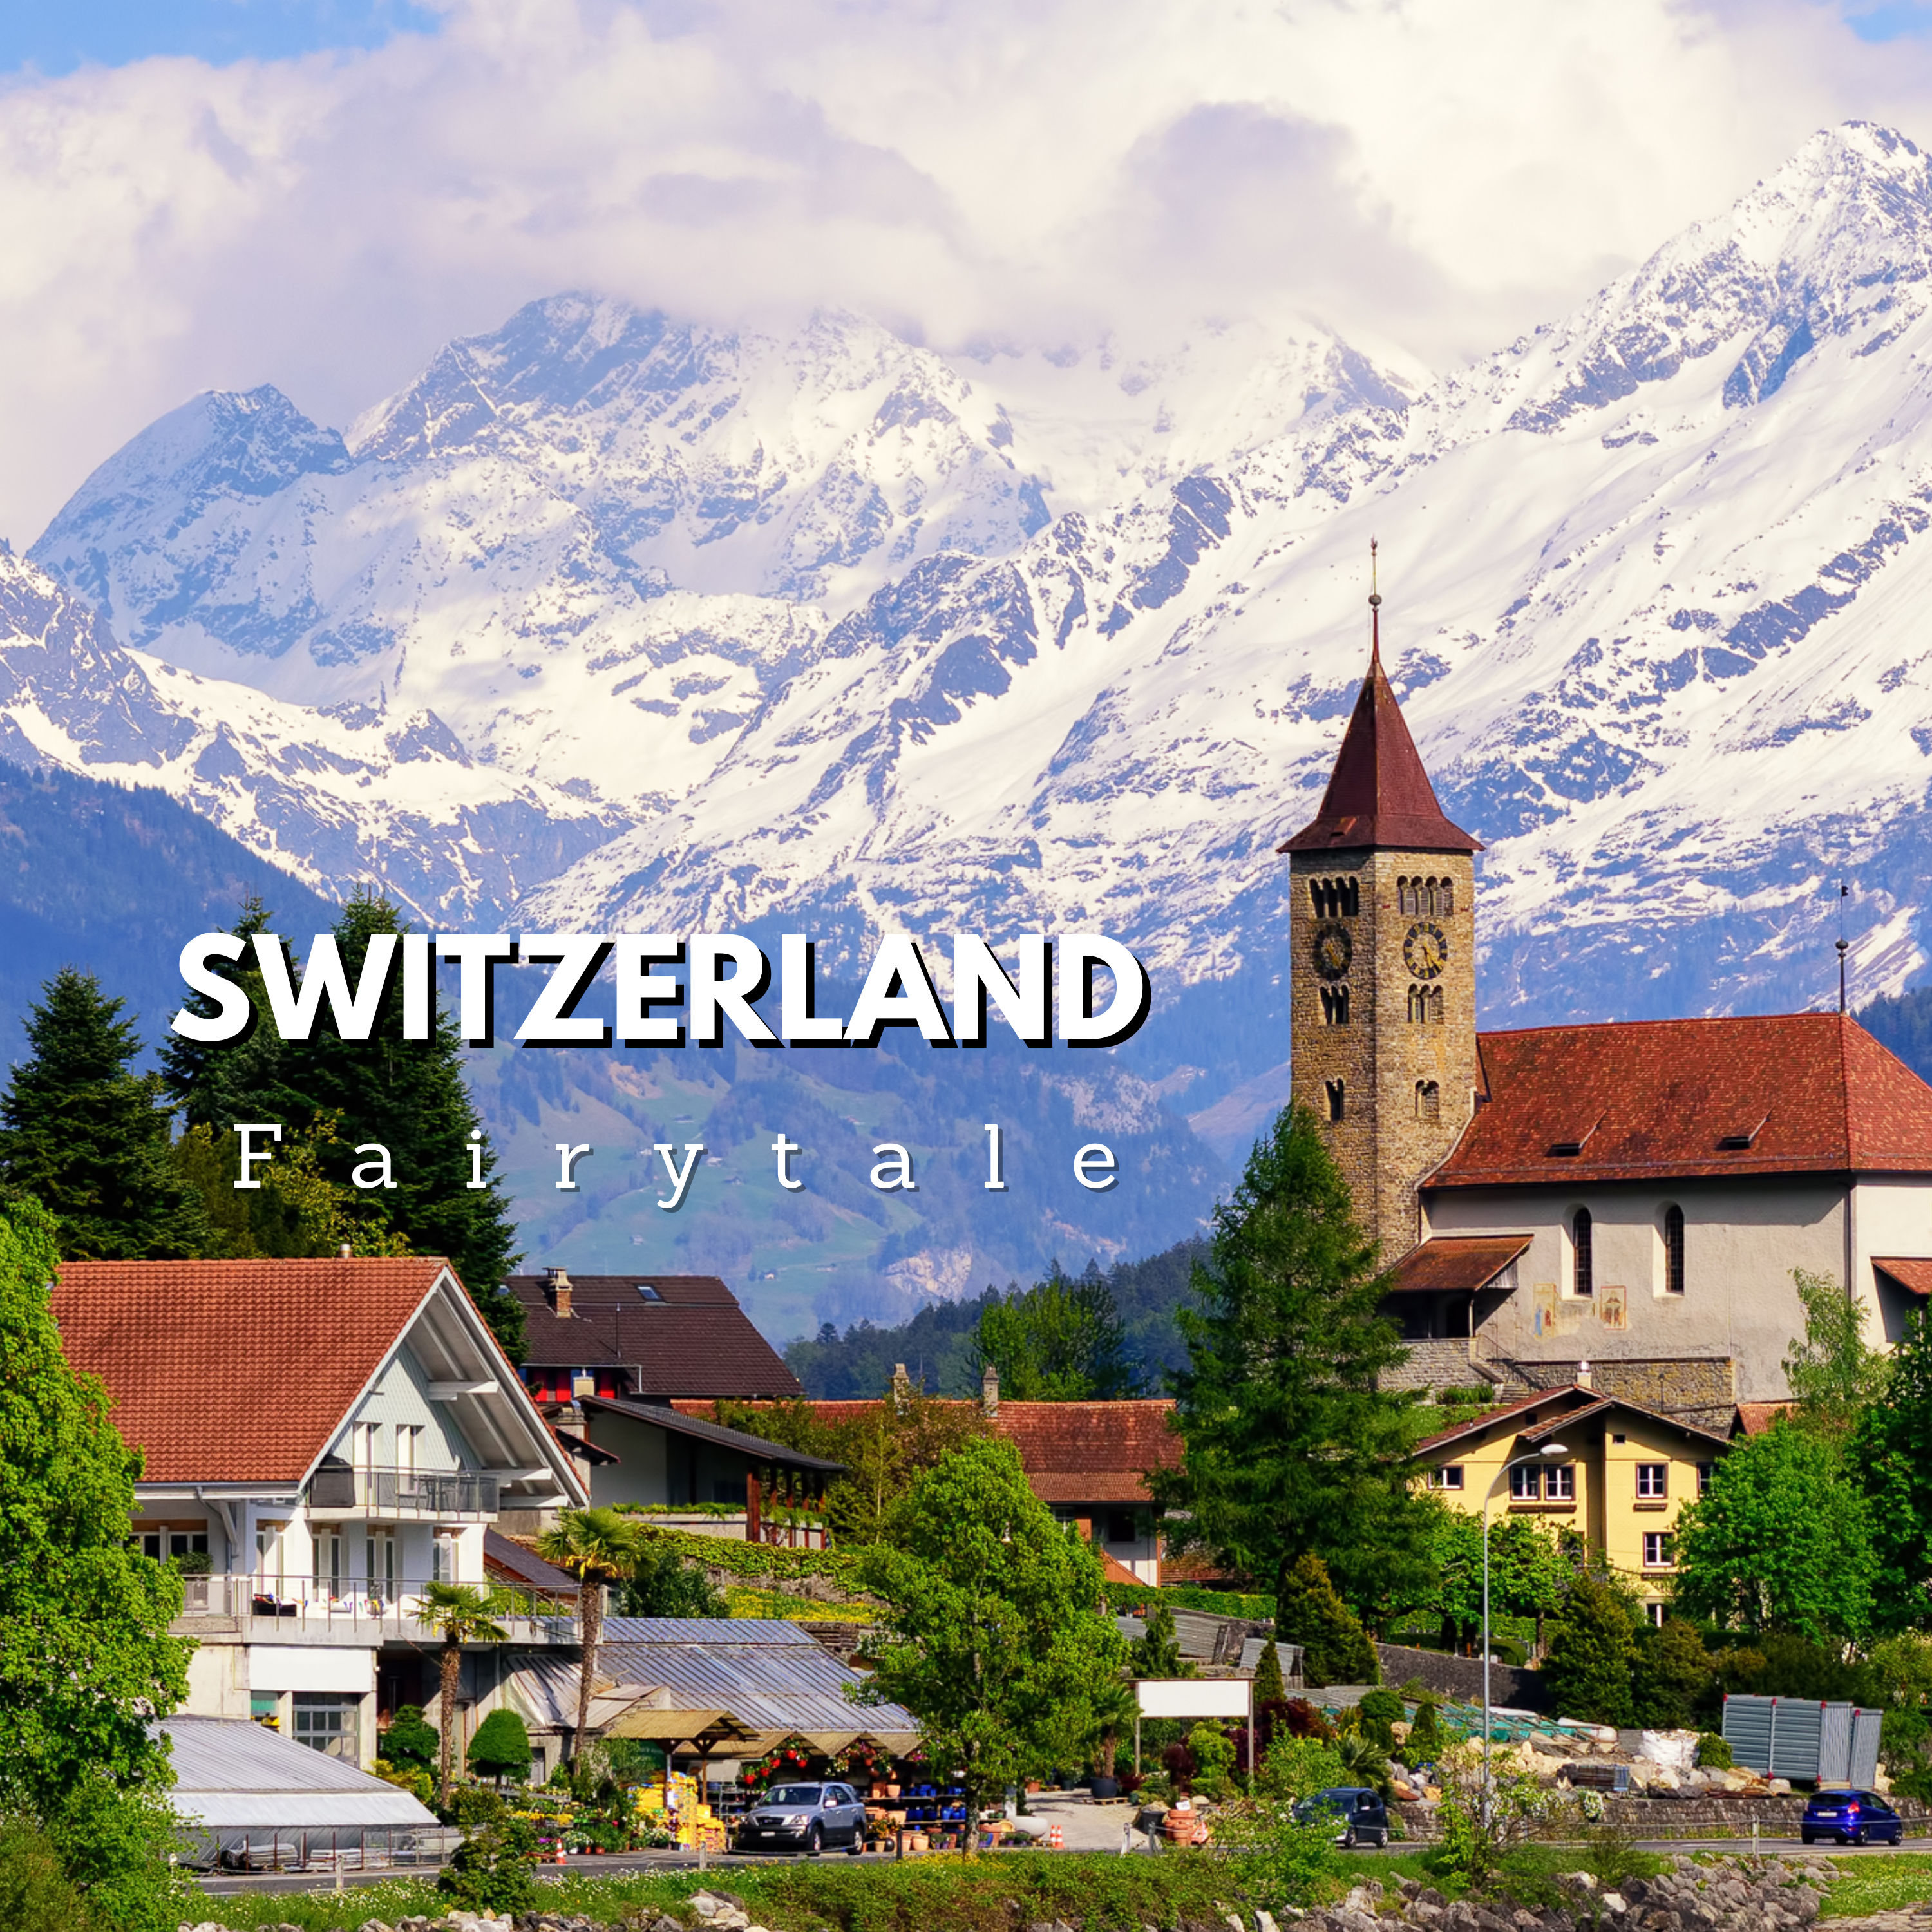 Switzerland ดินแดนที่สวยงามดั่งเทพนิยาย